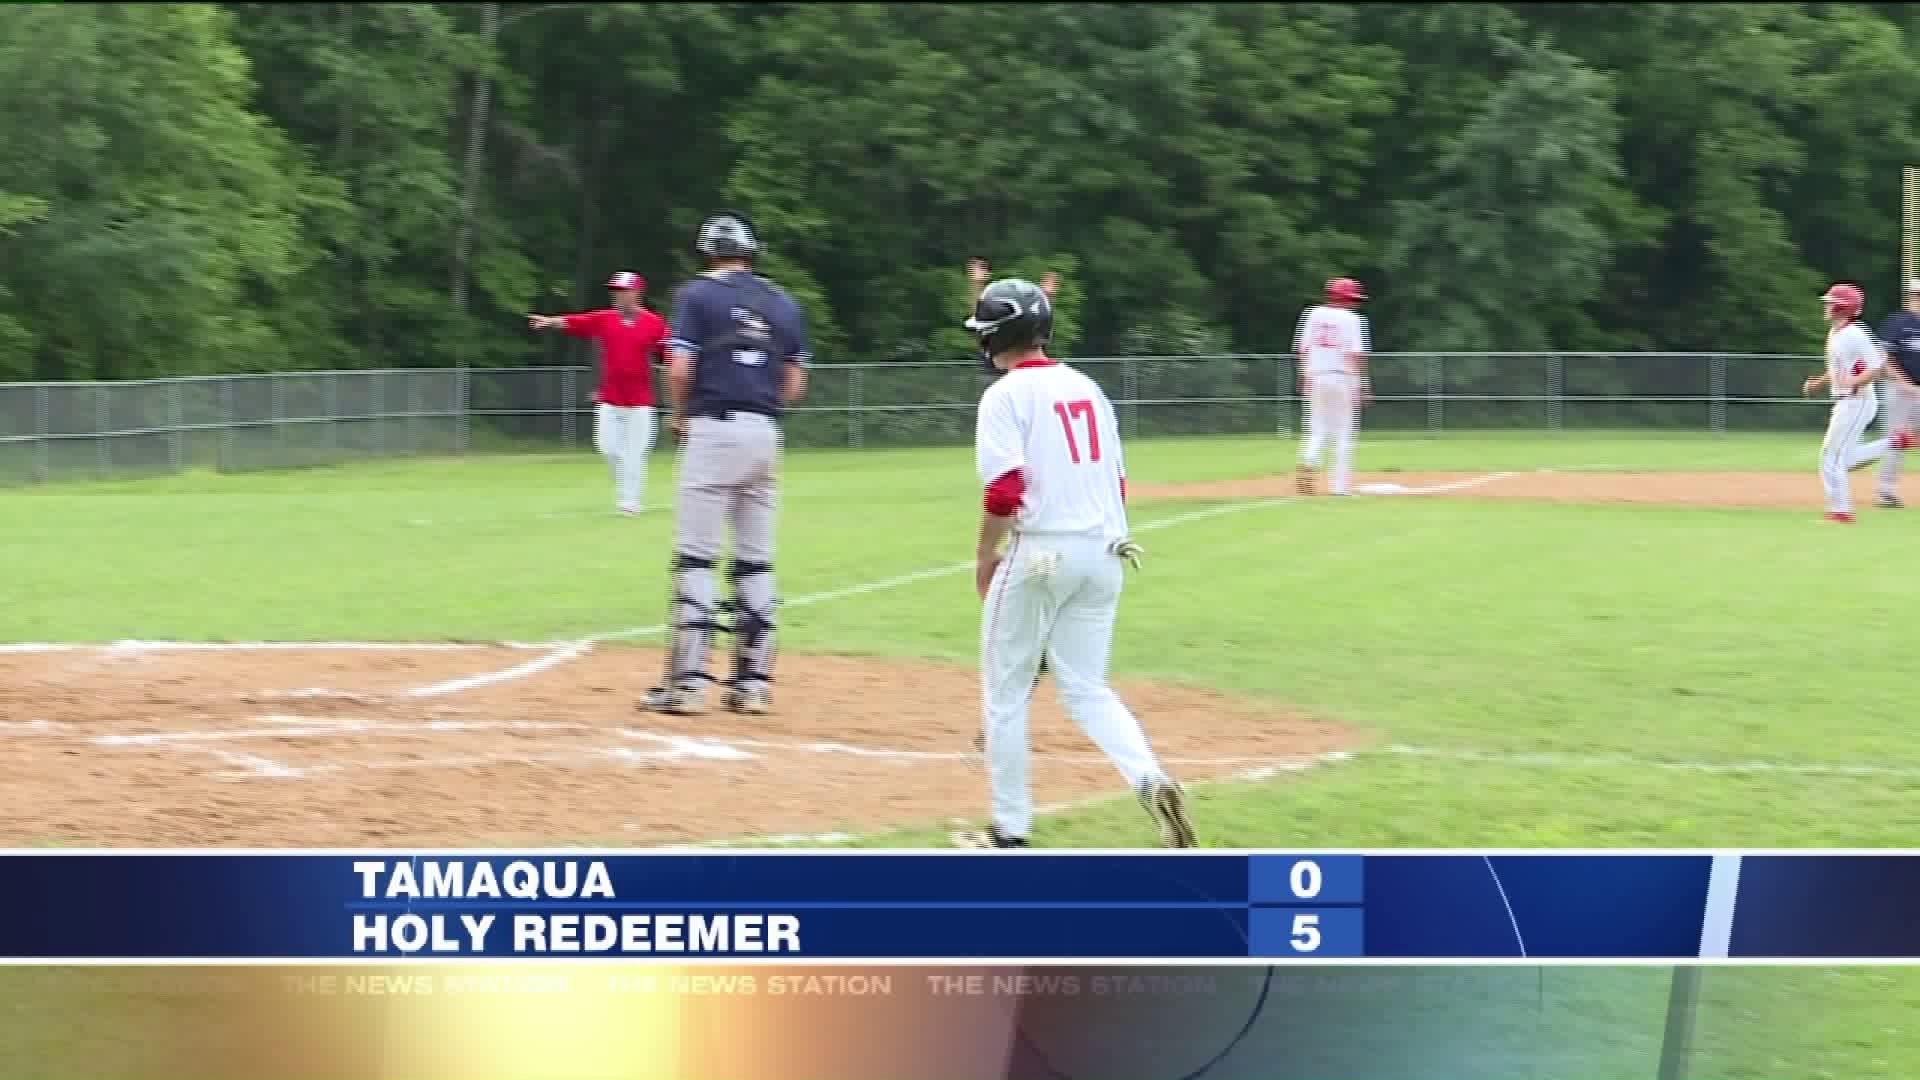 Tamaqua vs Holy Redeemer baseball